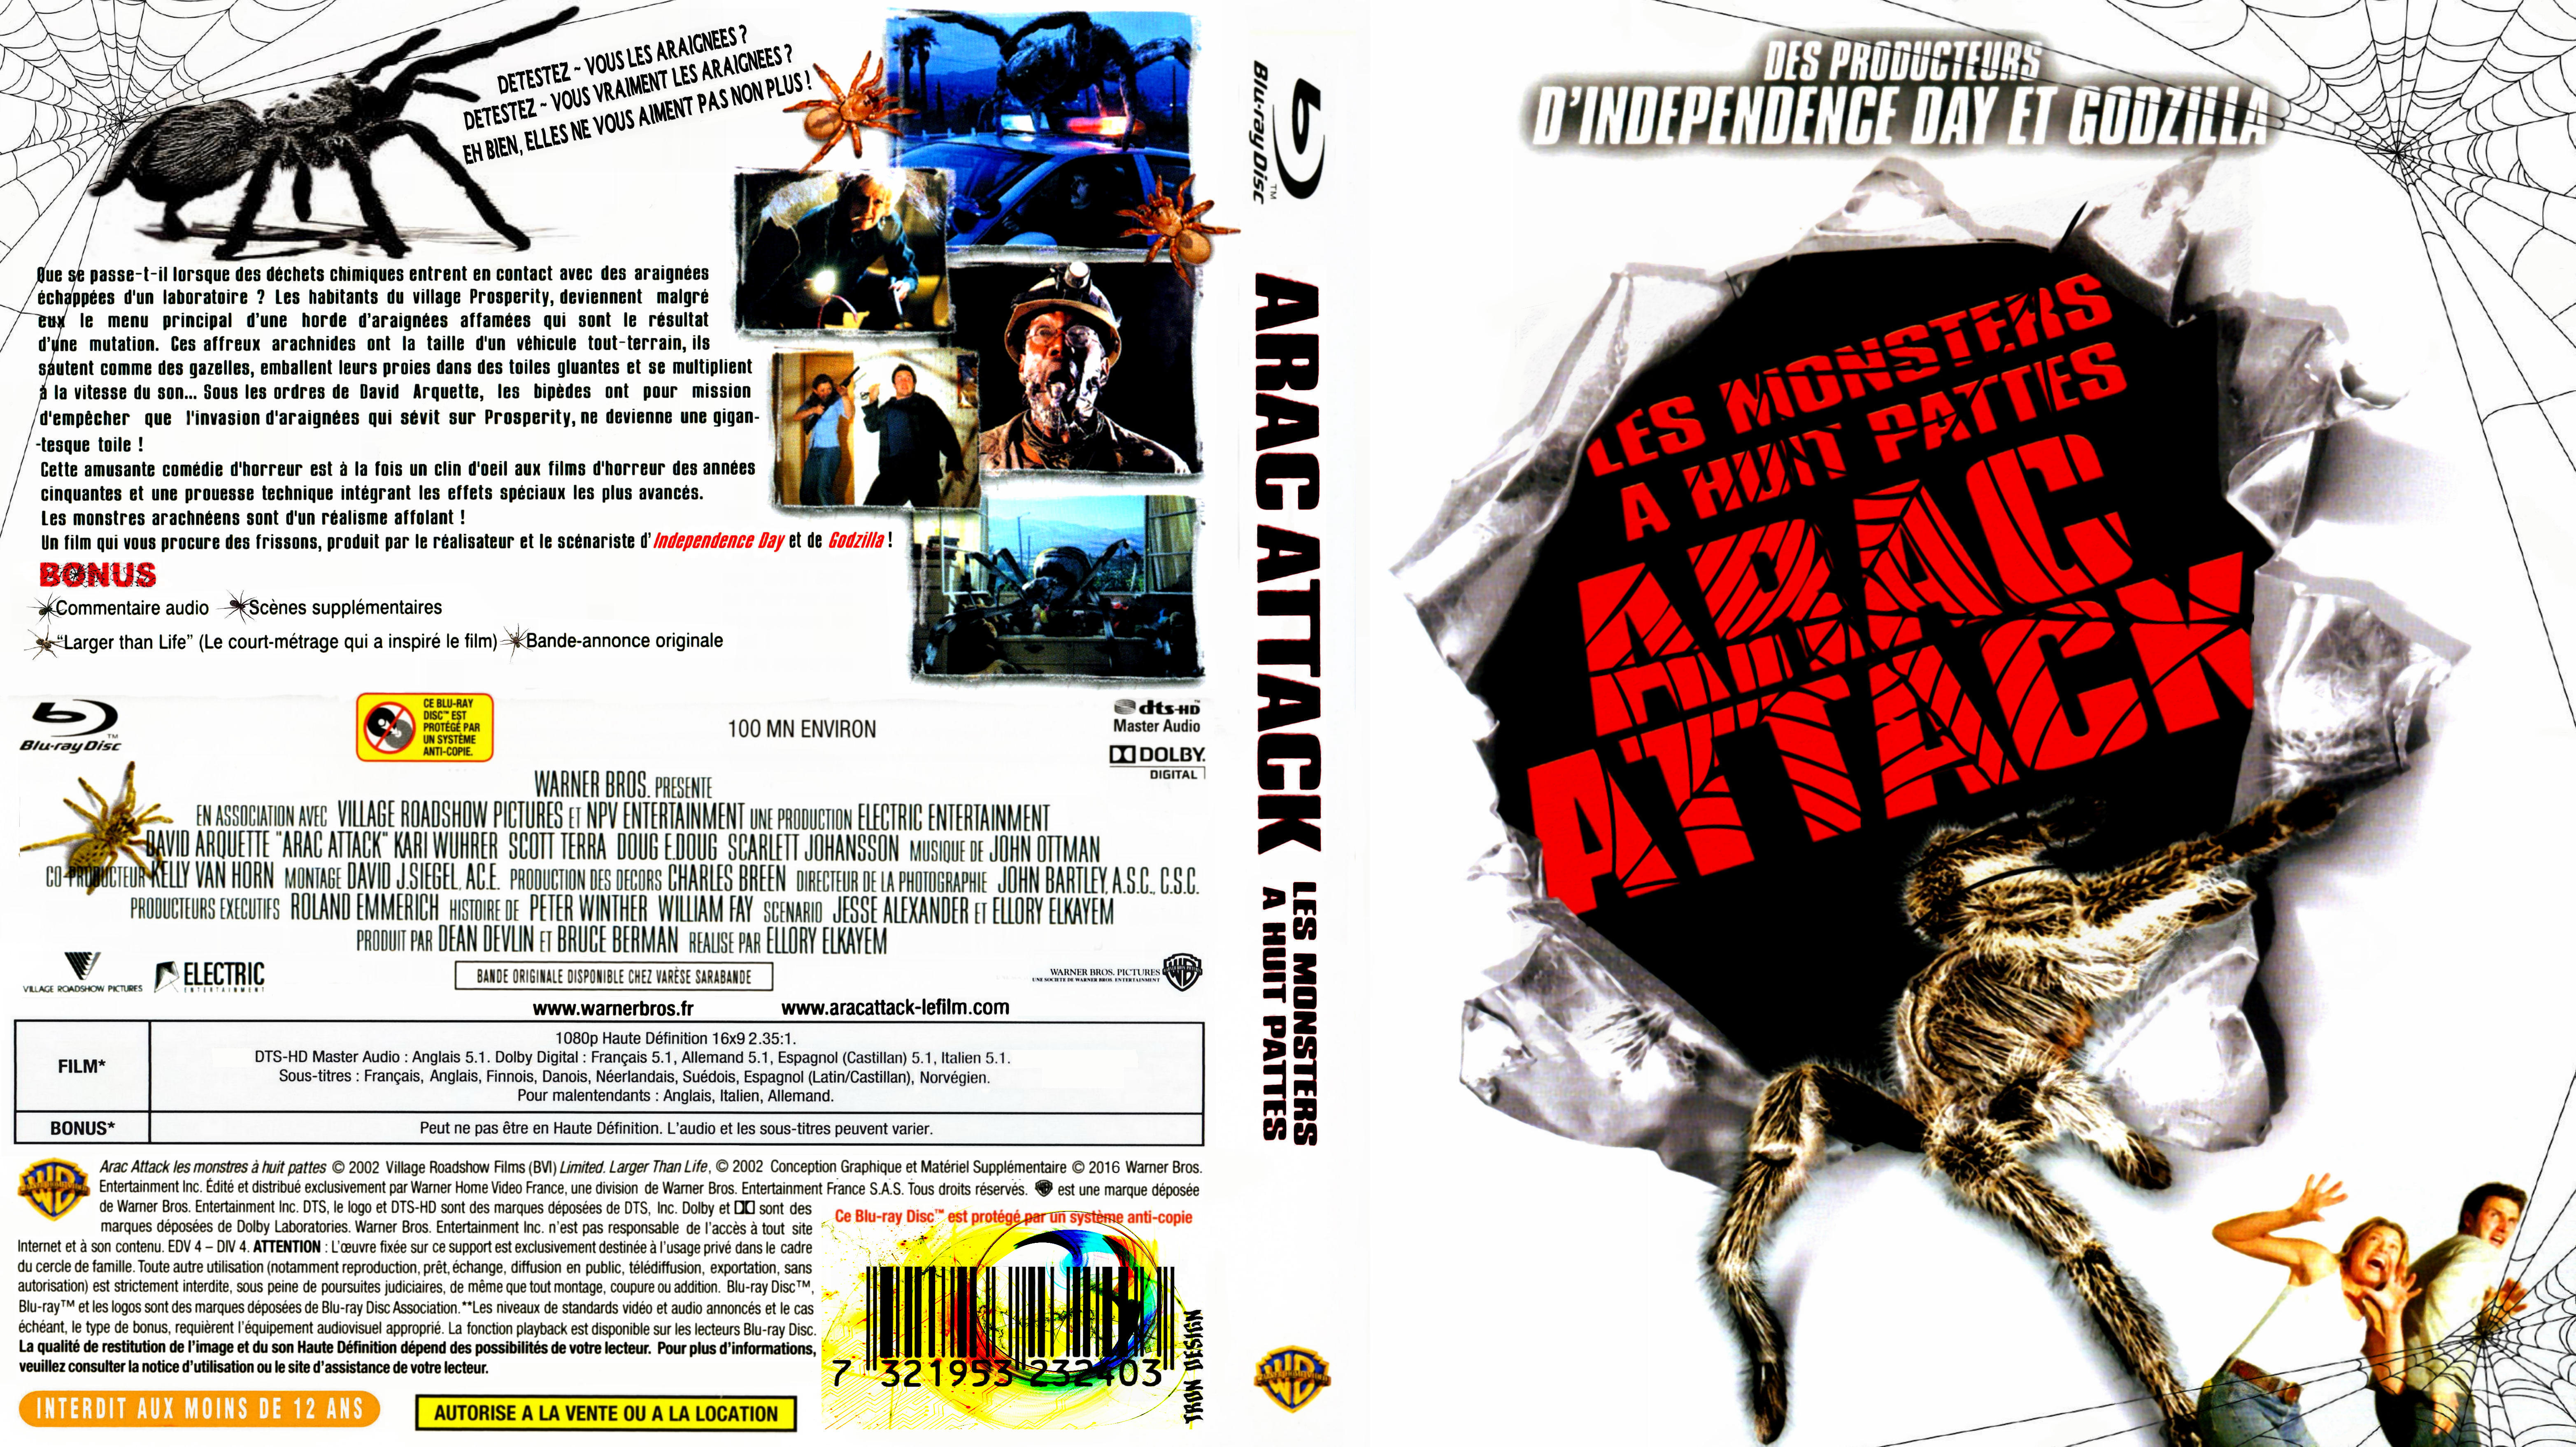 Jaquette DVD Arac attack custom (BLU-RAY) v2